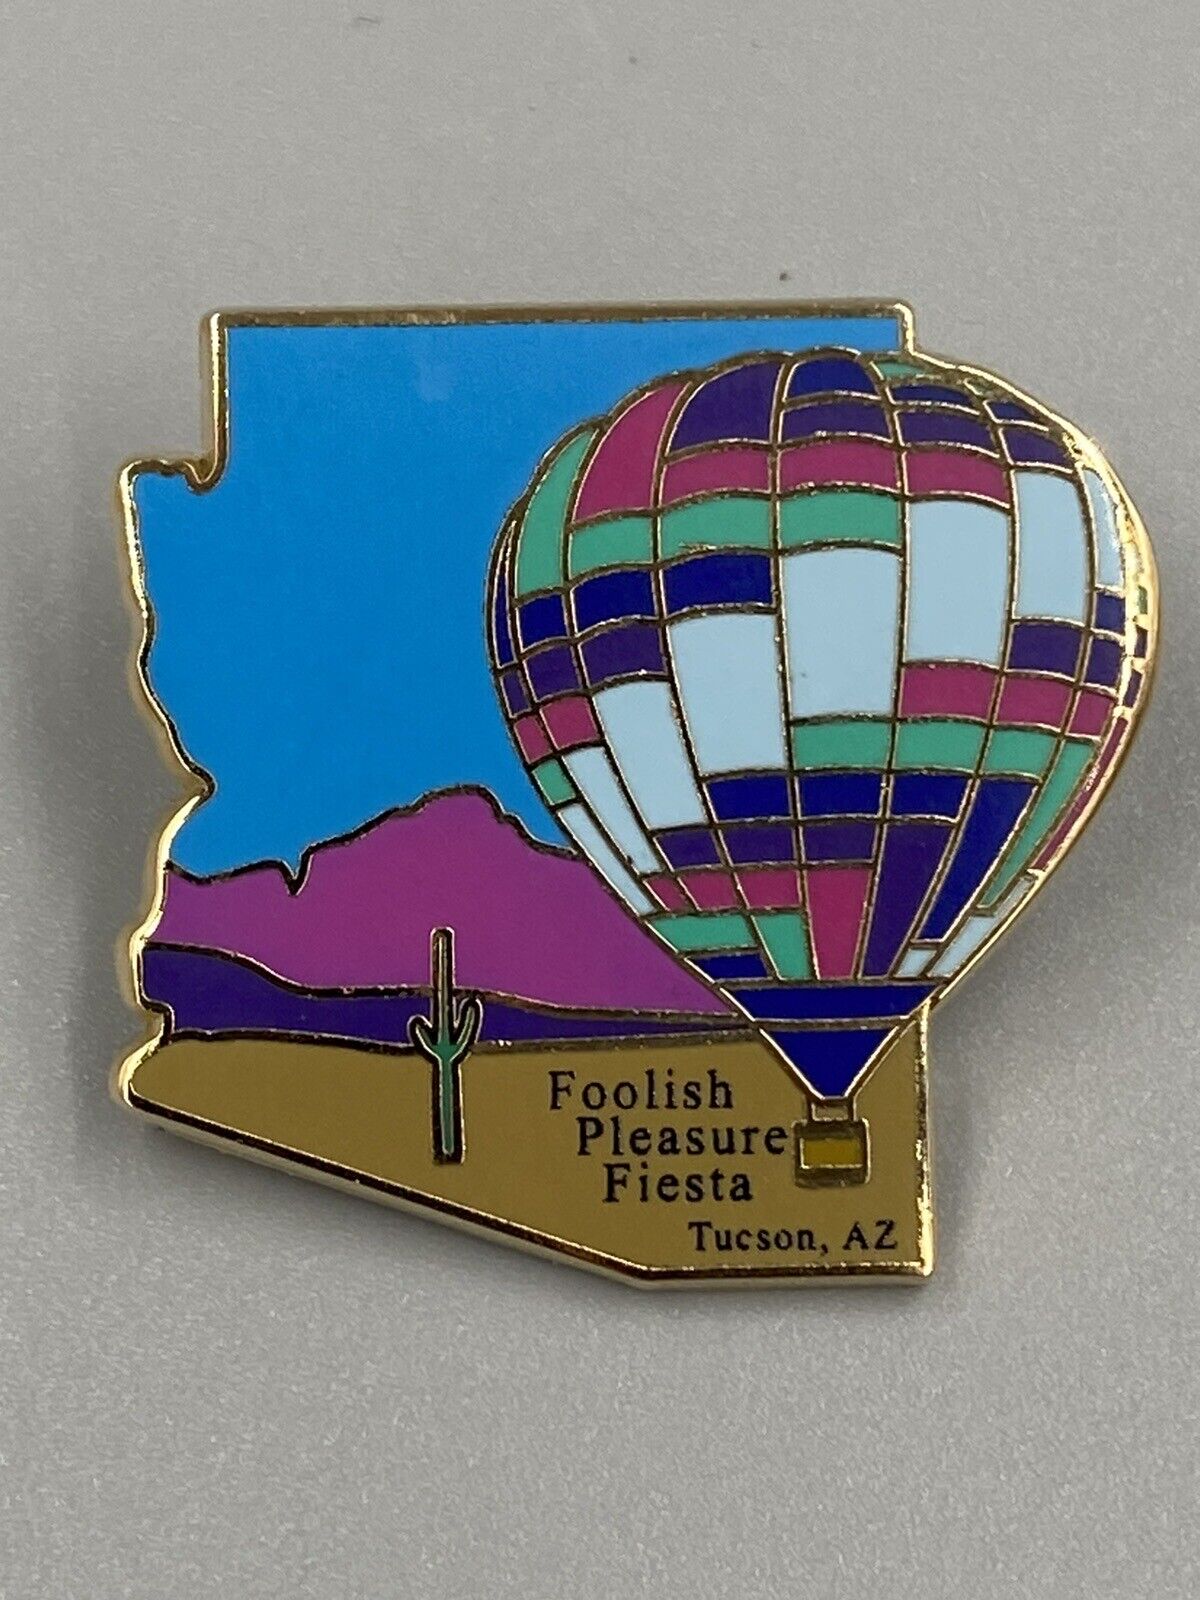 Foolish Pleasure Fiesta Hot Air Balloon Tucson Arizona Lapel Pin